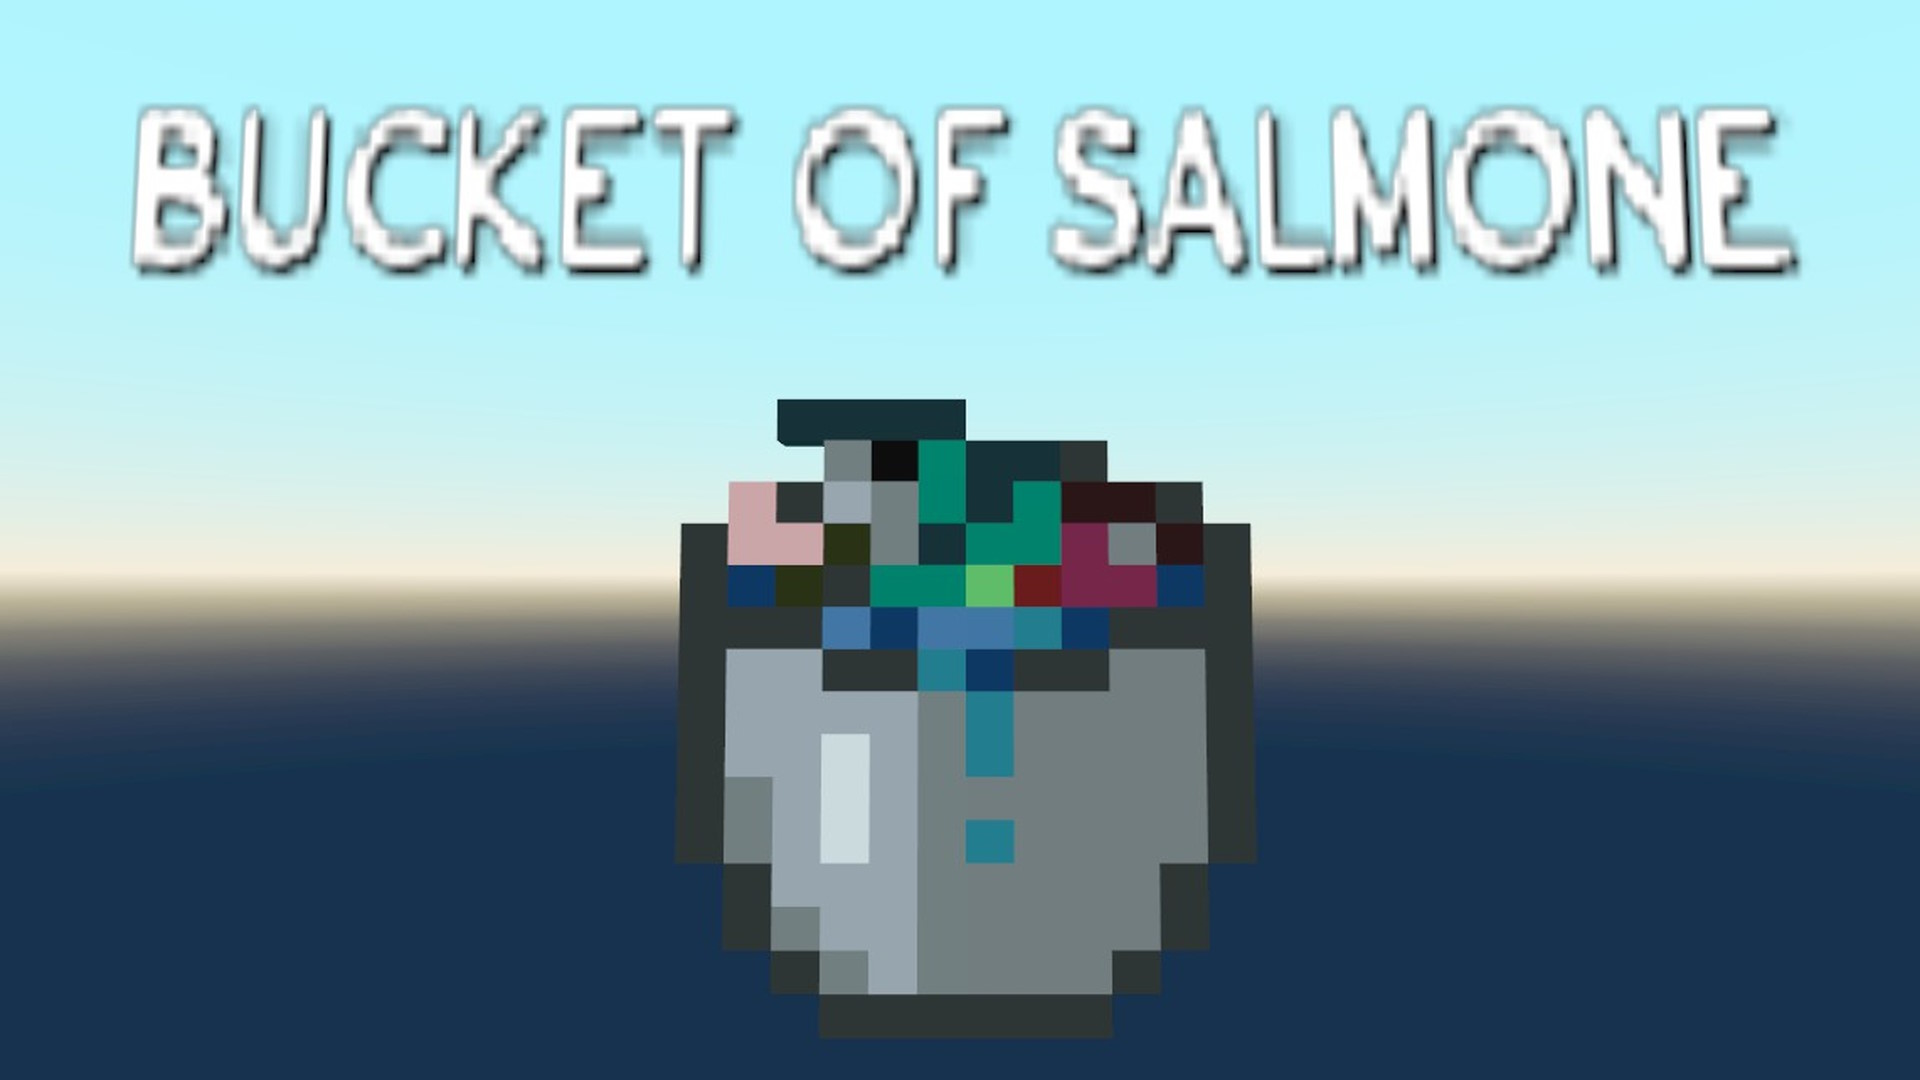 Bucket of Salmone by Iamshyguy